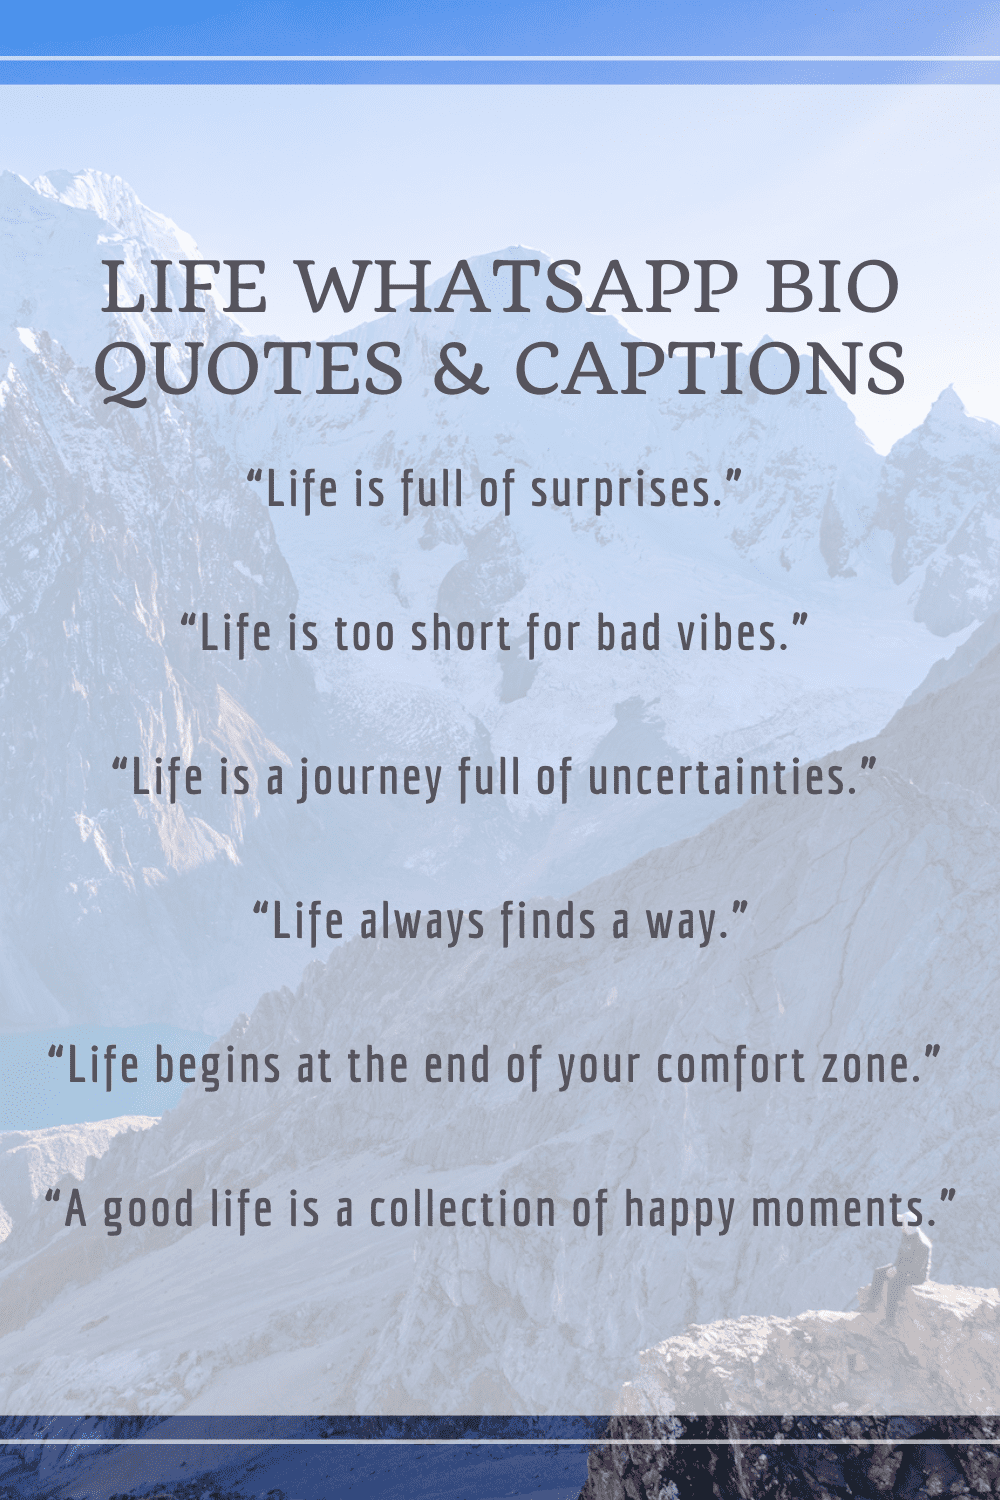 Life Quotes for WhatsApp Bio